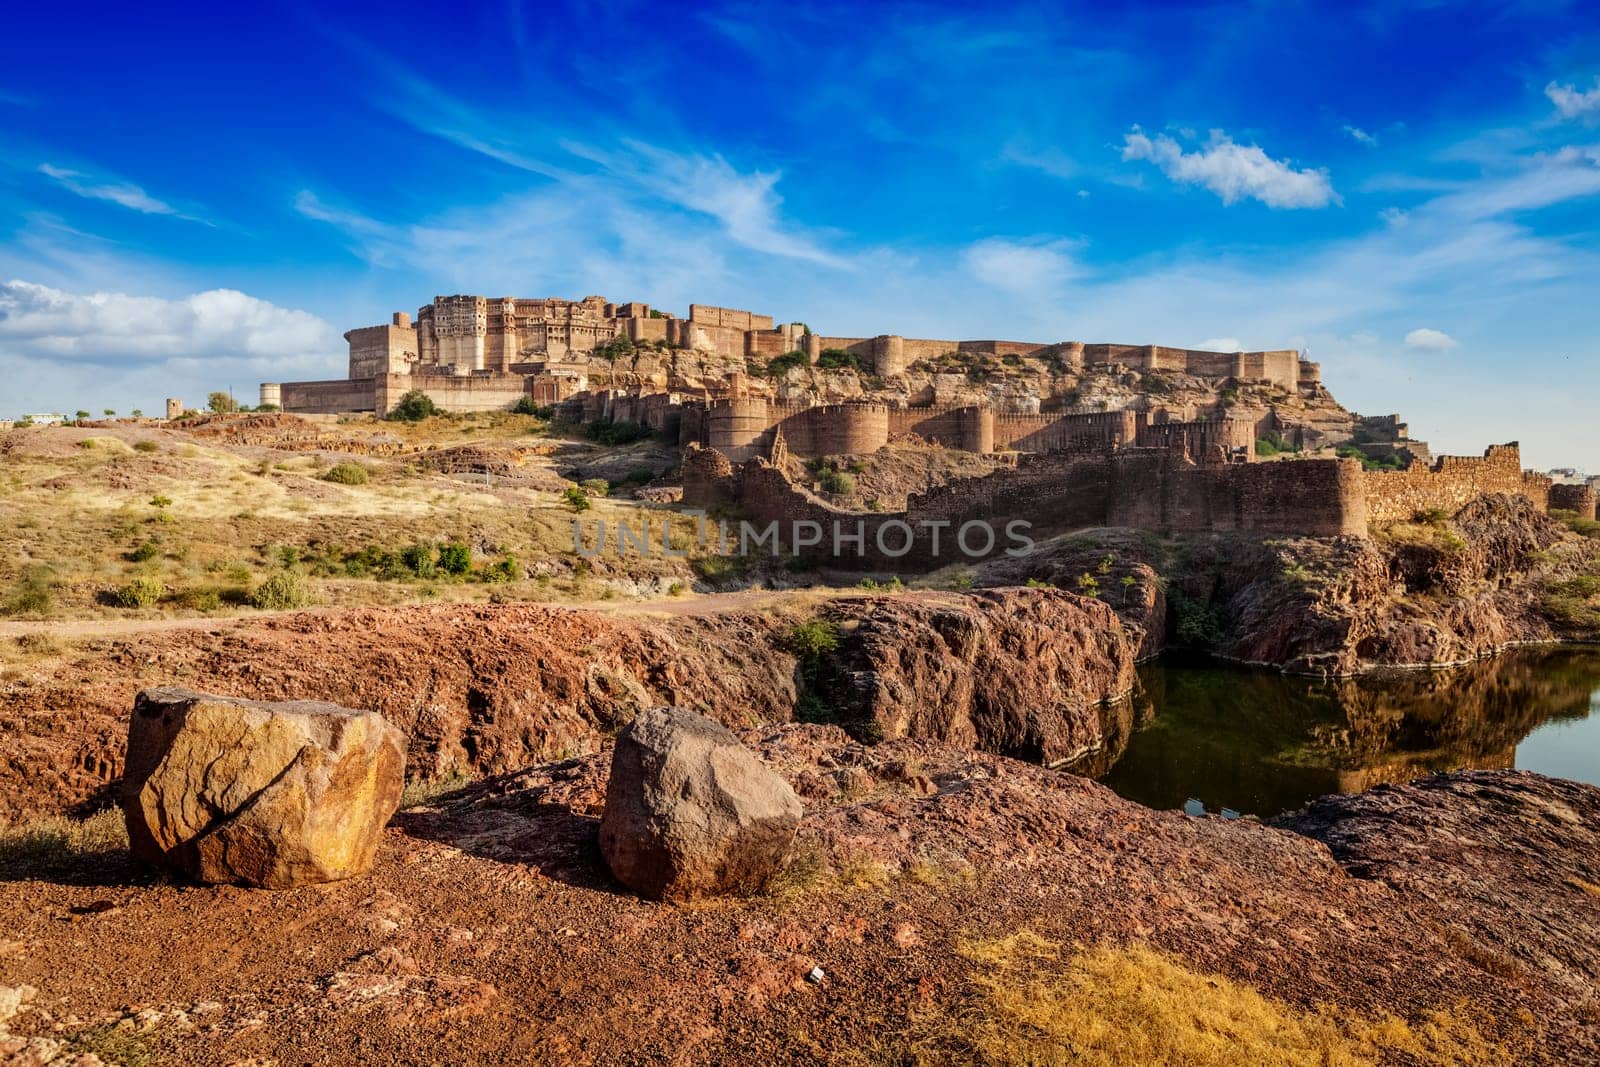 Mehrangarh Fort, Jodhpur, Rajasthan, India by dimol